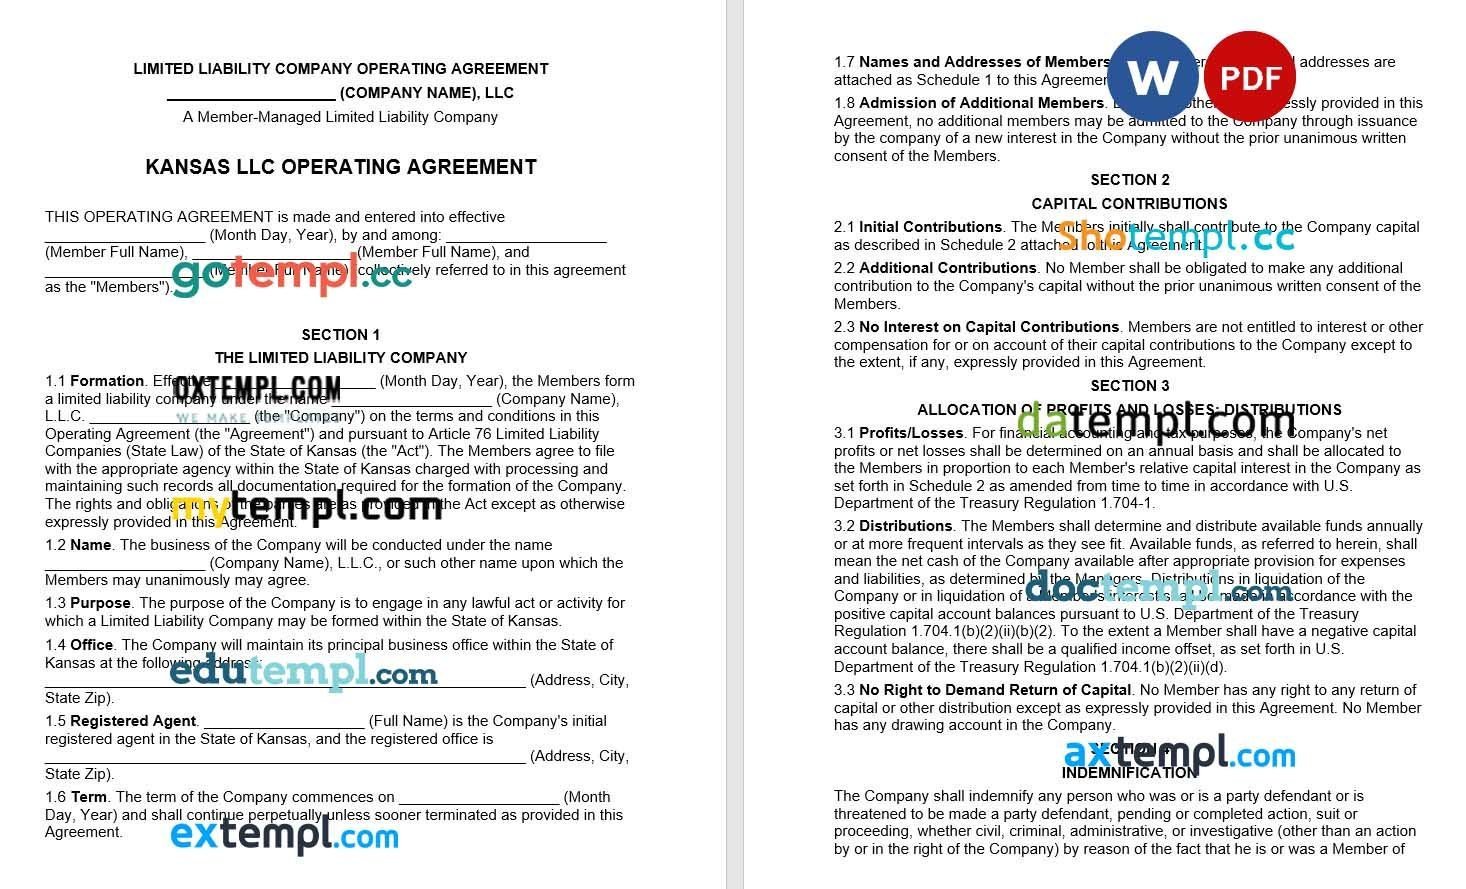 Kansas Multi-Member LLC Operating Agreement Word example, fully editable